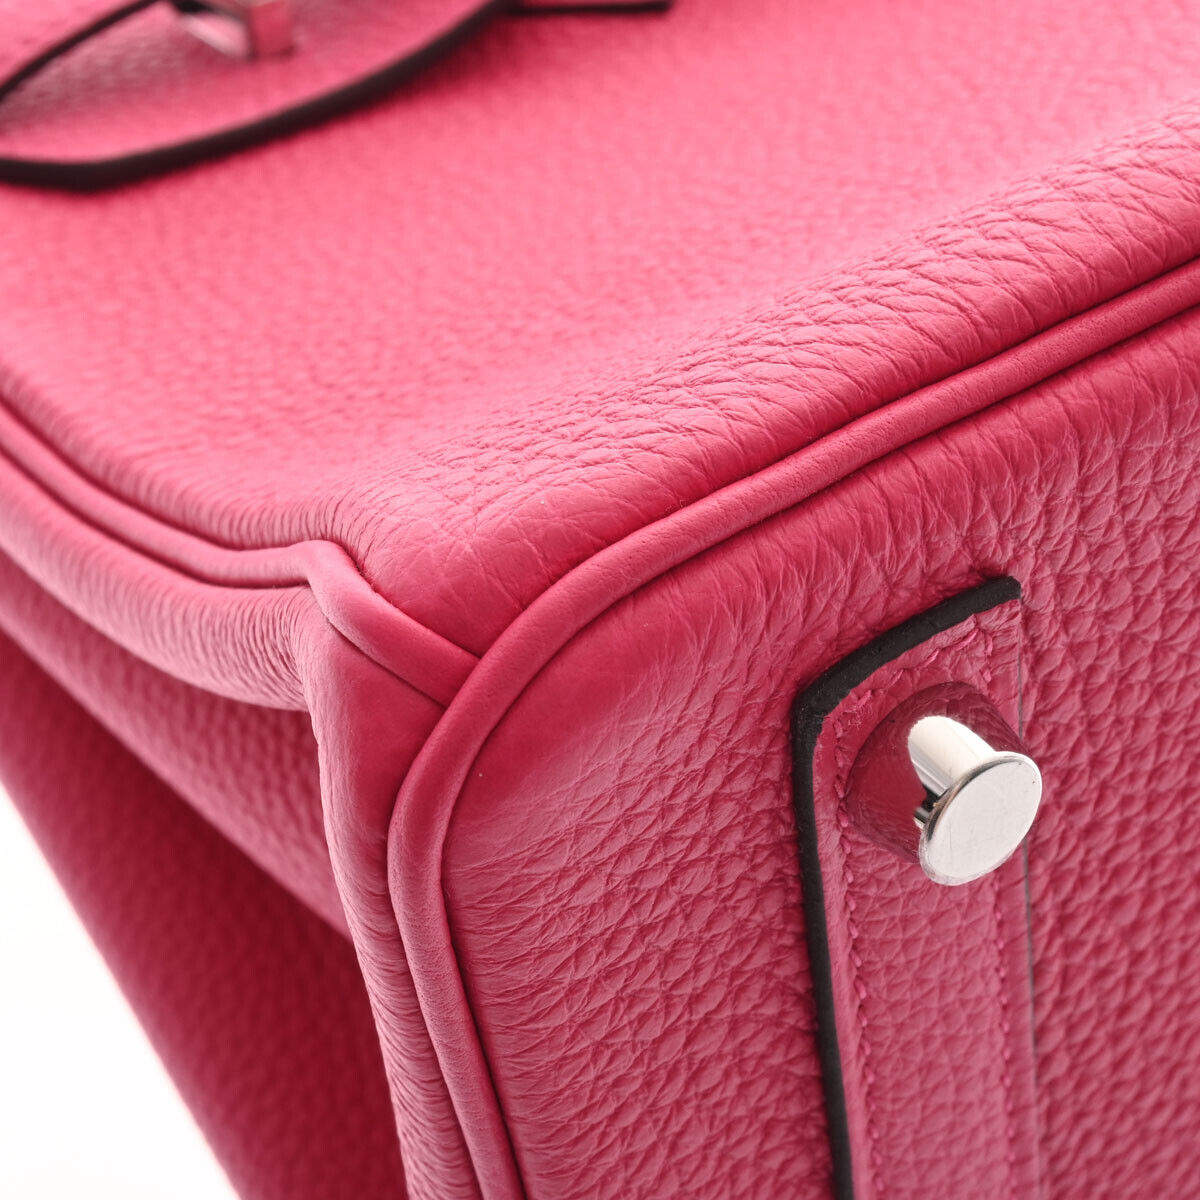 Hermes Birkin Handbag Pink Swift with Palladium Hardware 25 Pink 217940458